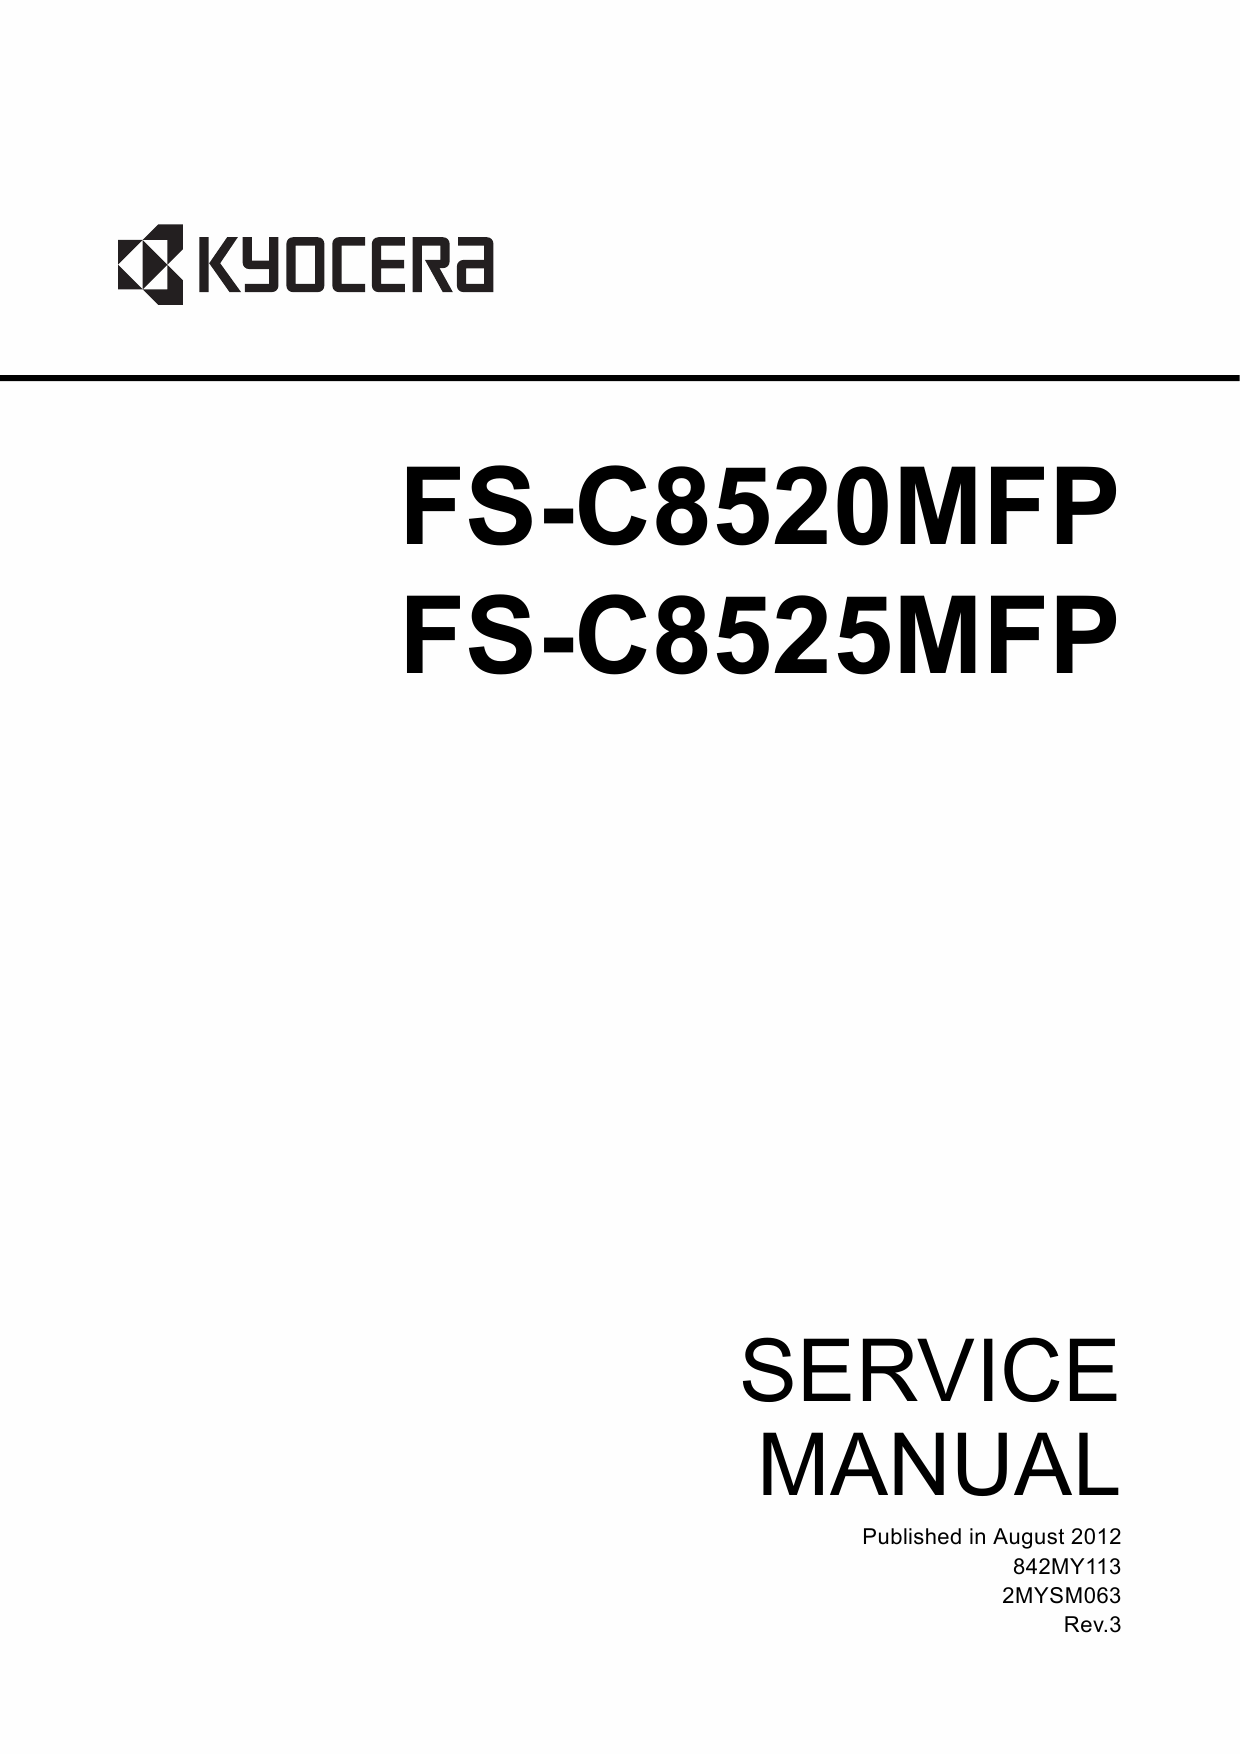 KYOCERA ColorMFP FS-C8520MFP C8525MFP Service Manual-1